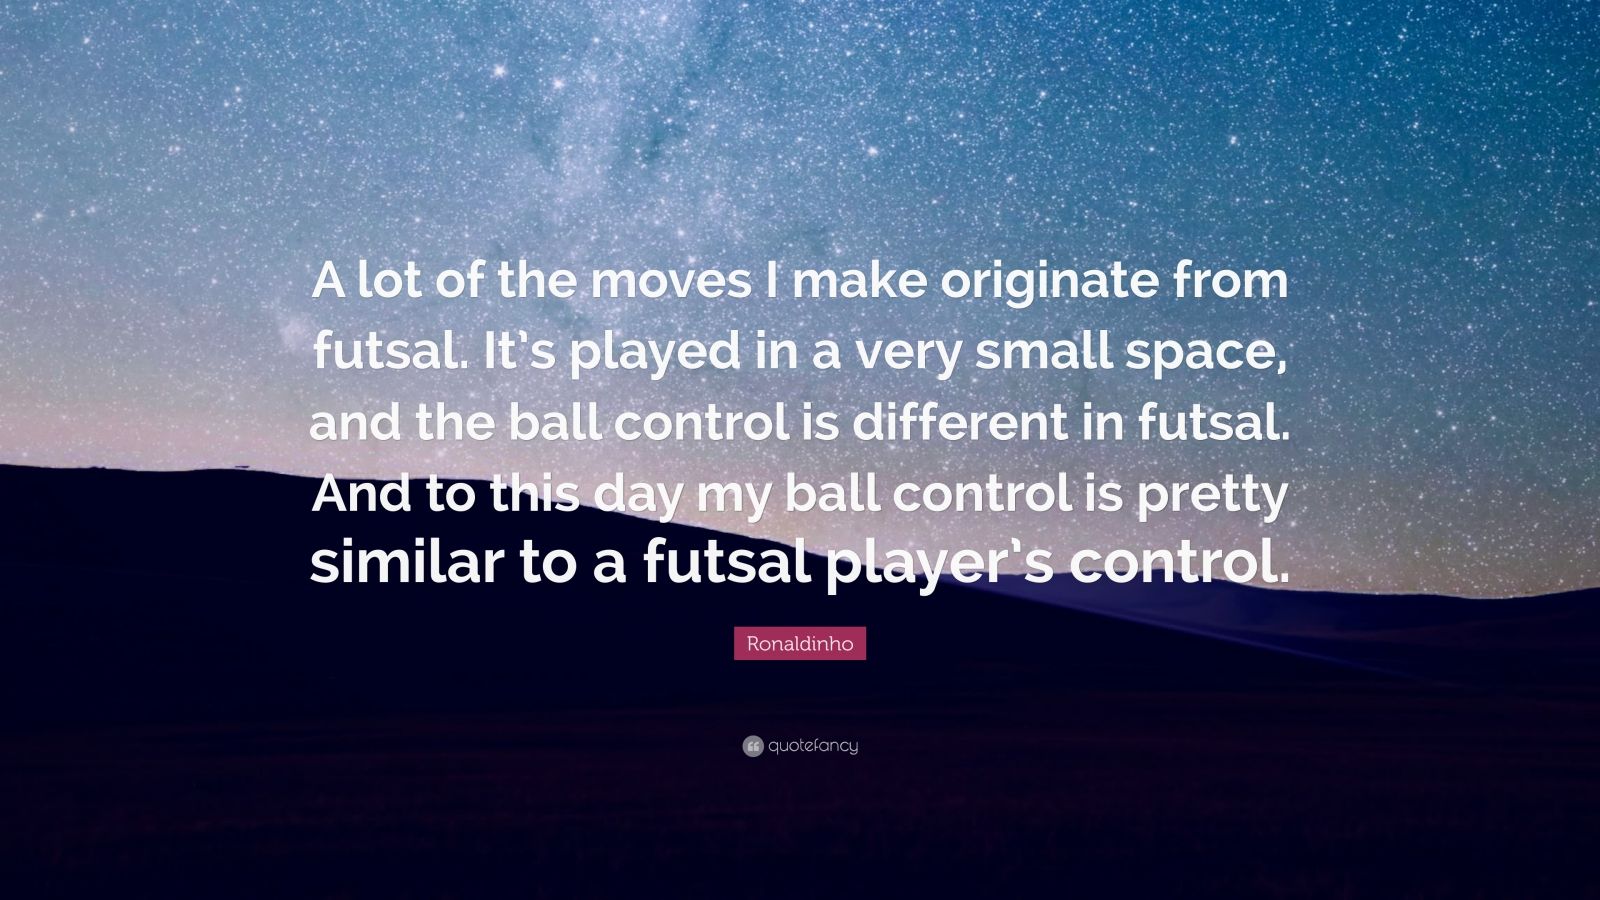 Ronaldinho Quote: “A lot of the moves I make originate from futsal. It